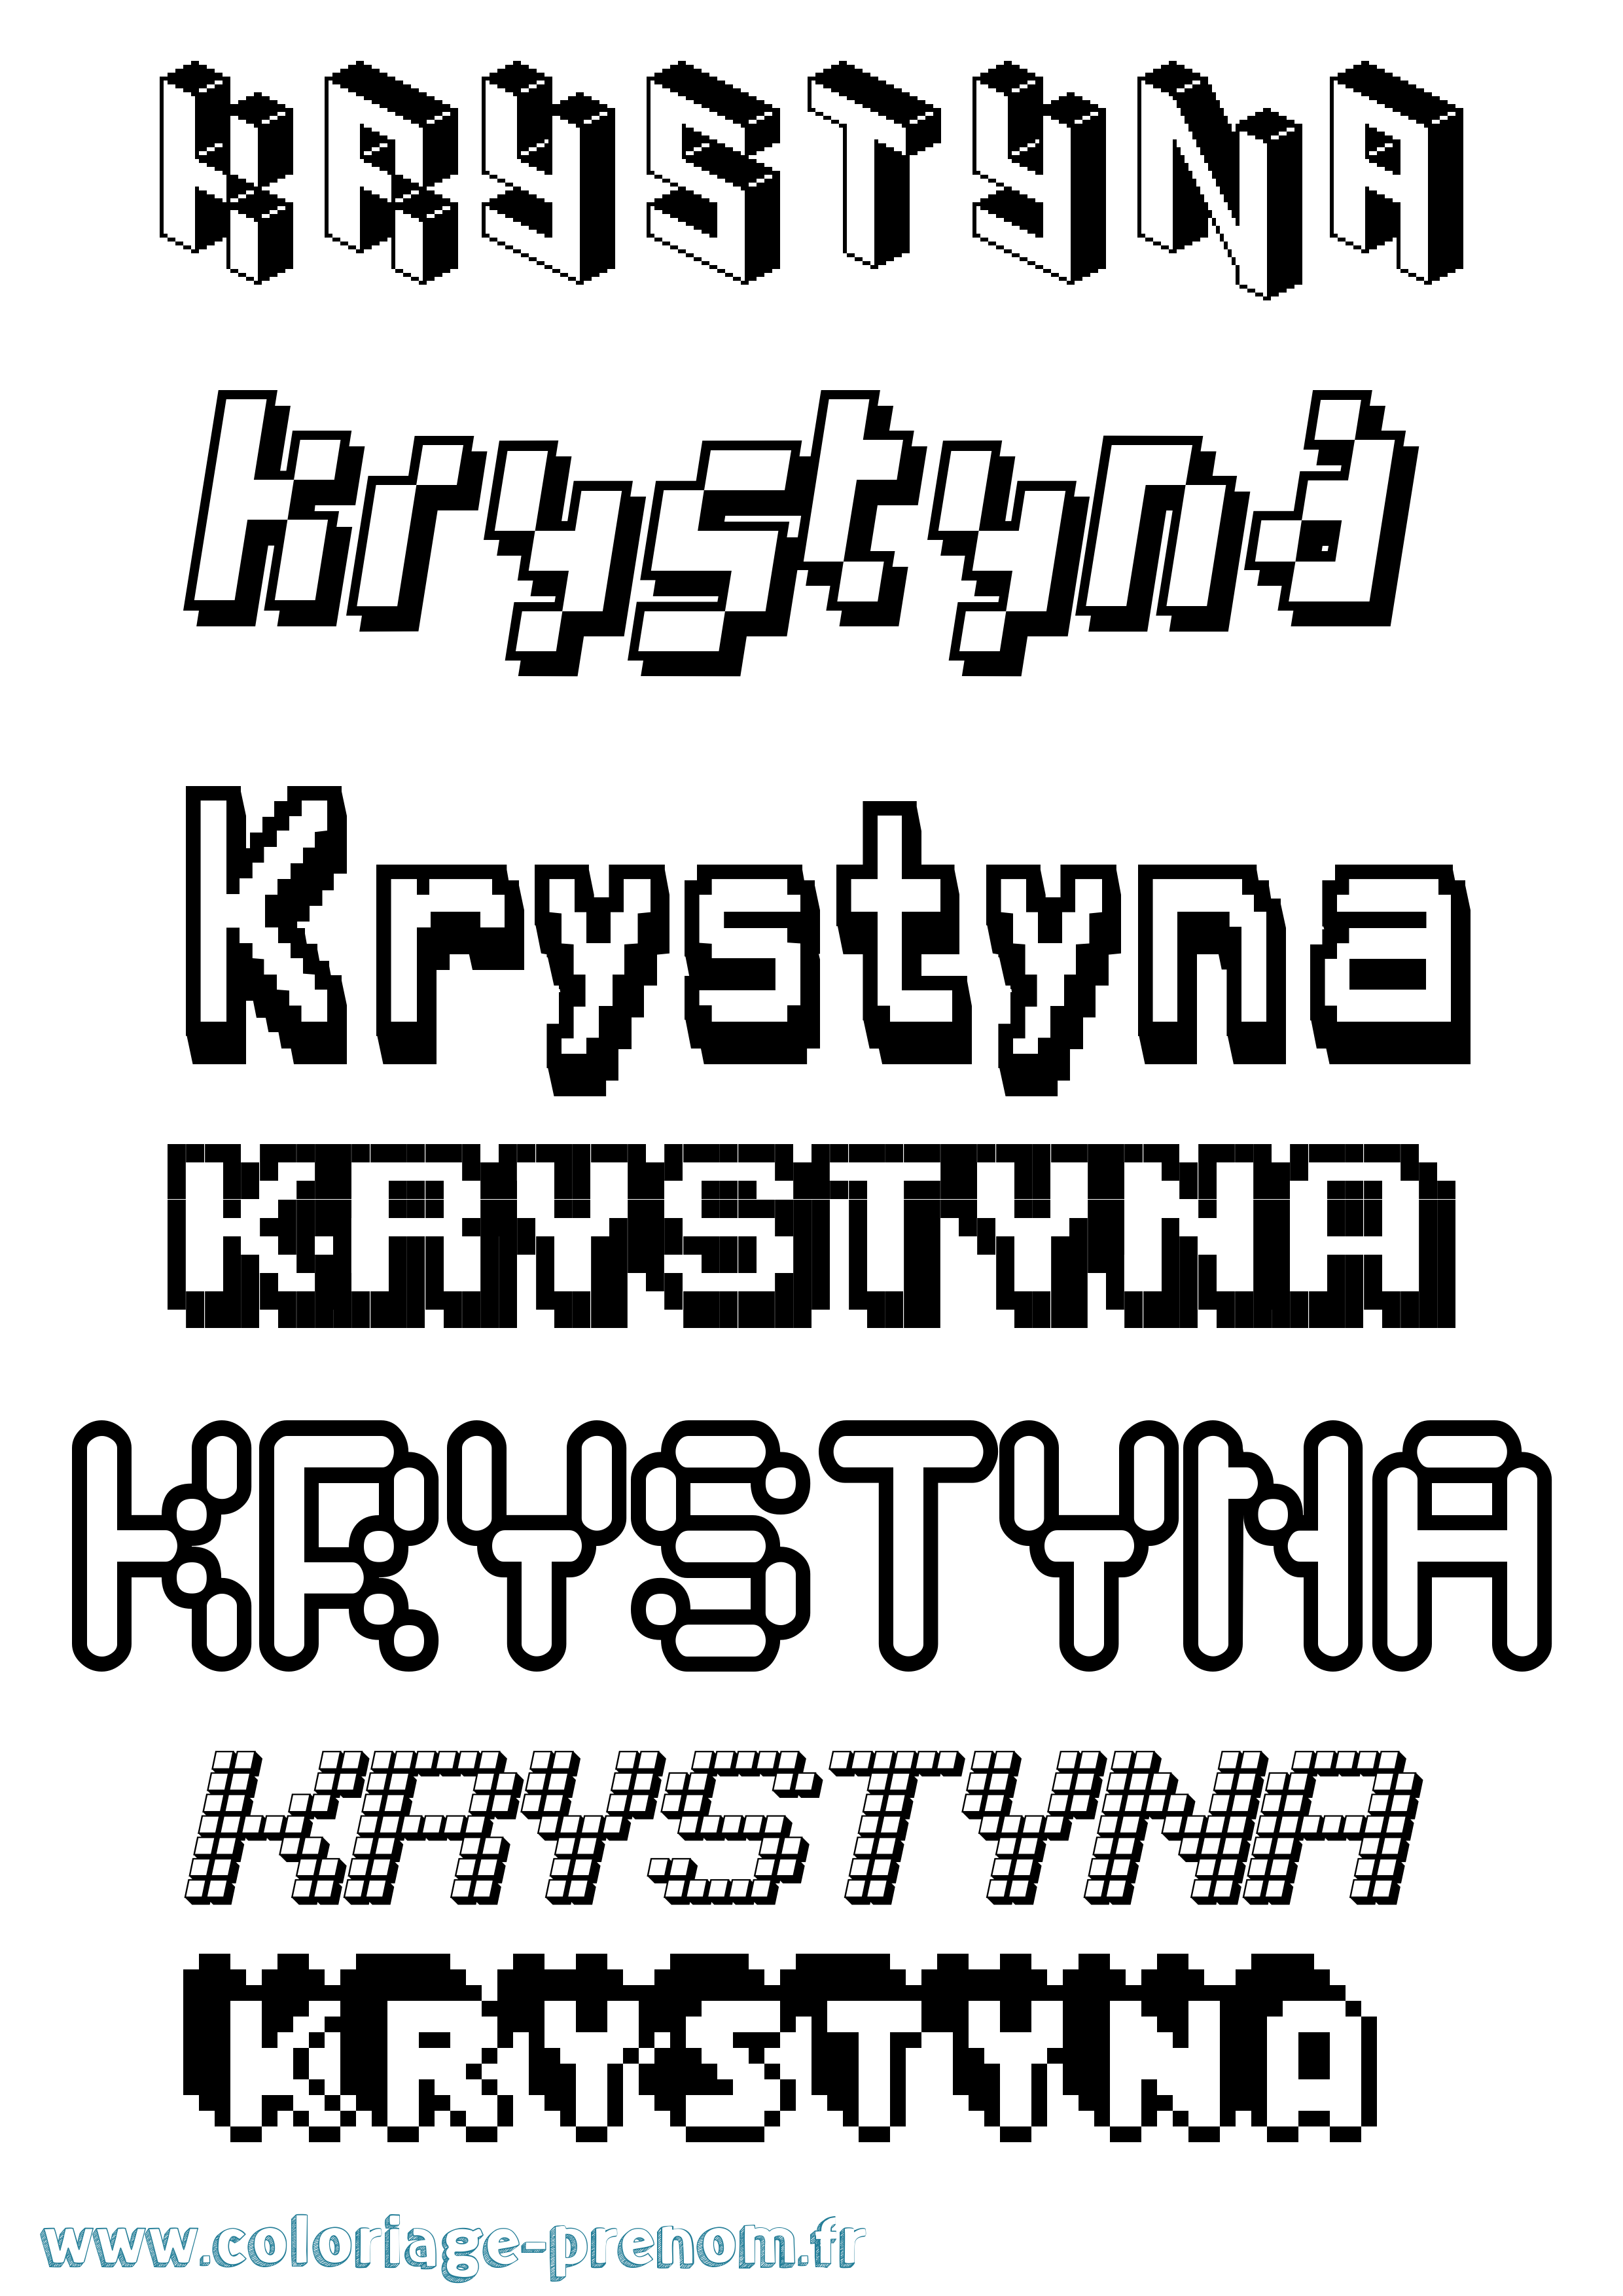 Coloriage prénom Krystyna Pixel